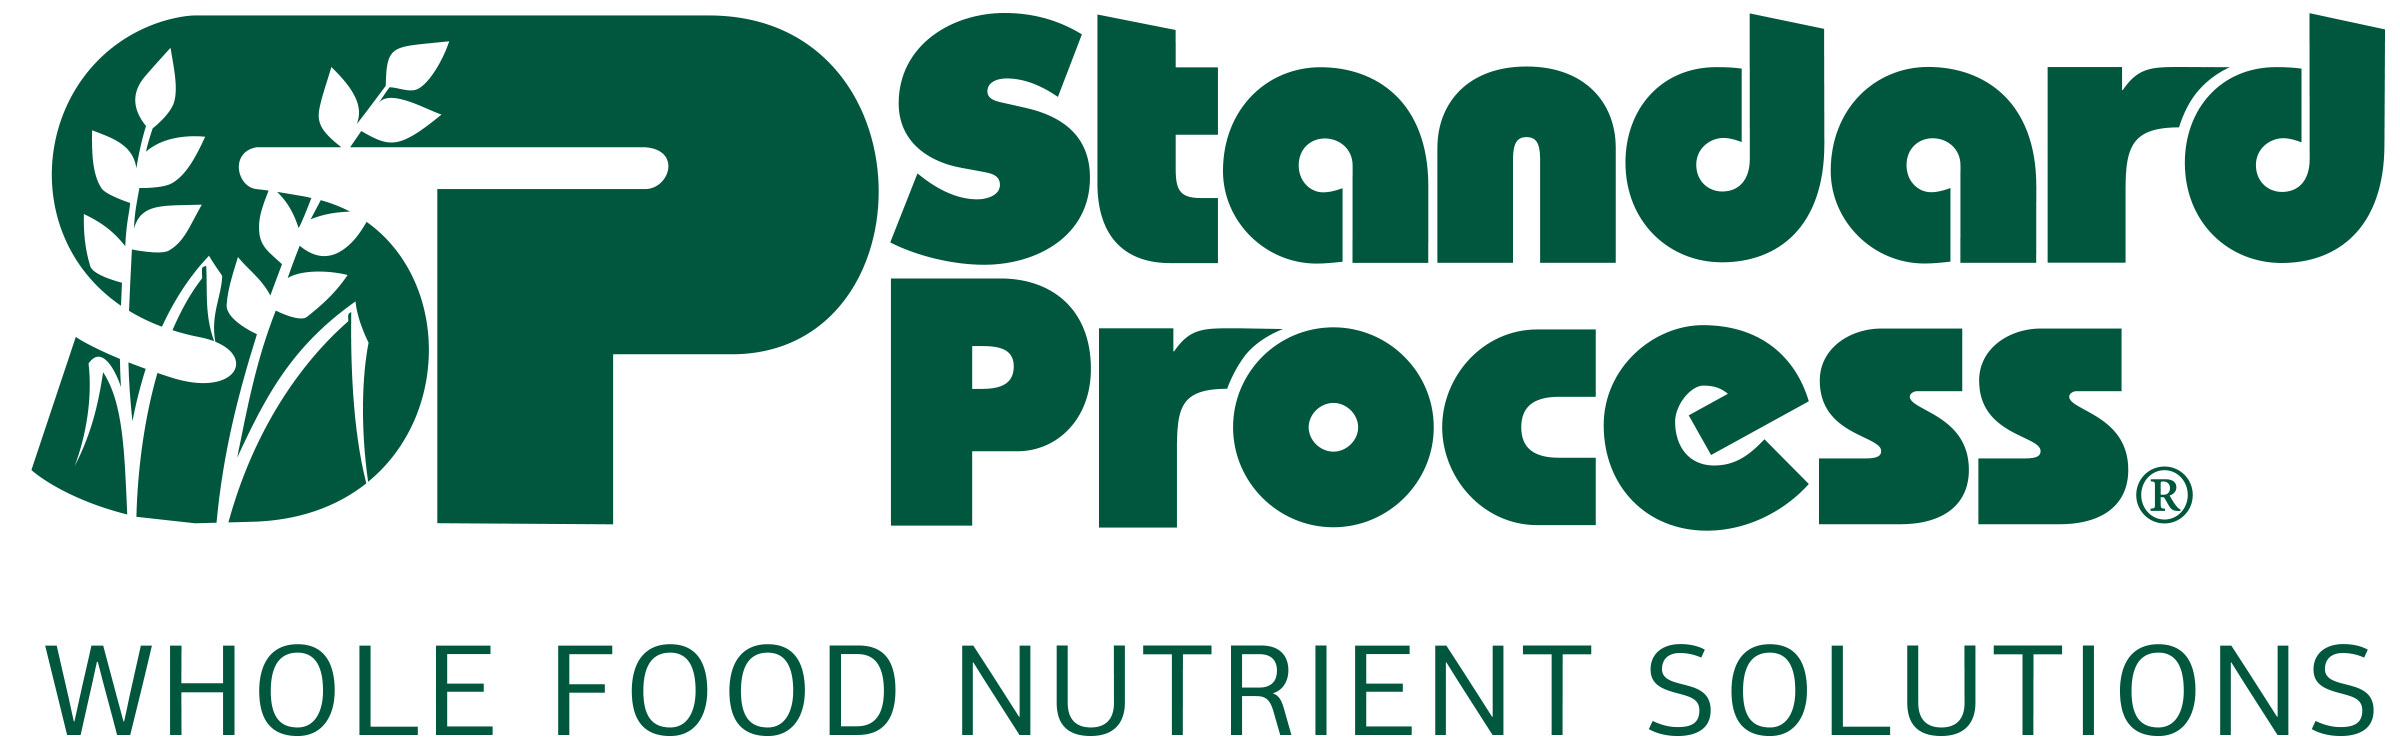 CMYK_StandardProcess Nutrient Solution